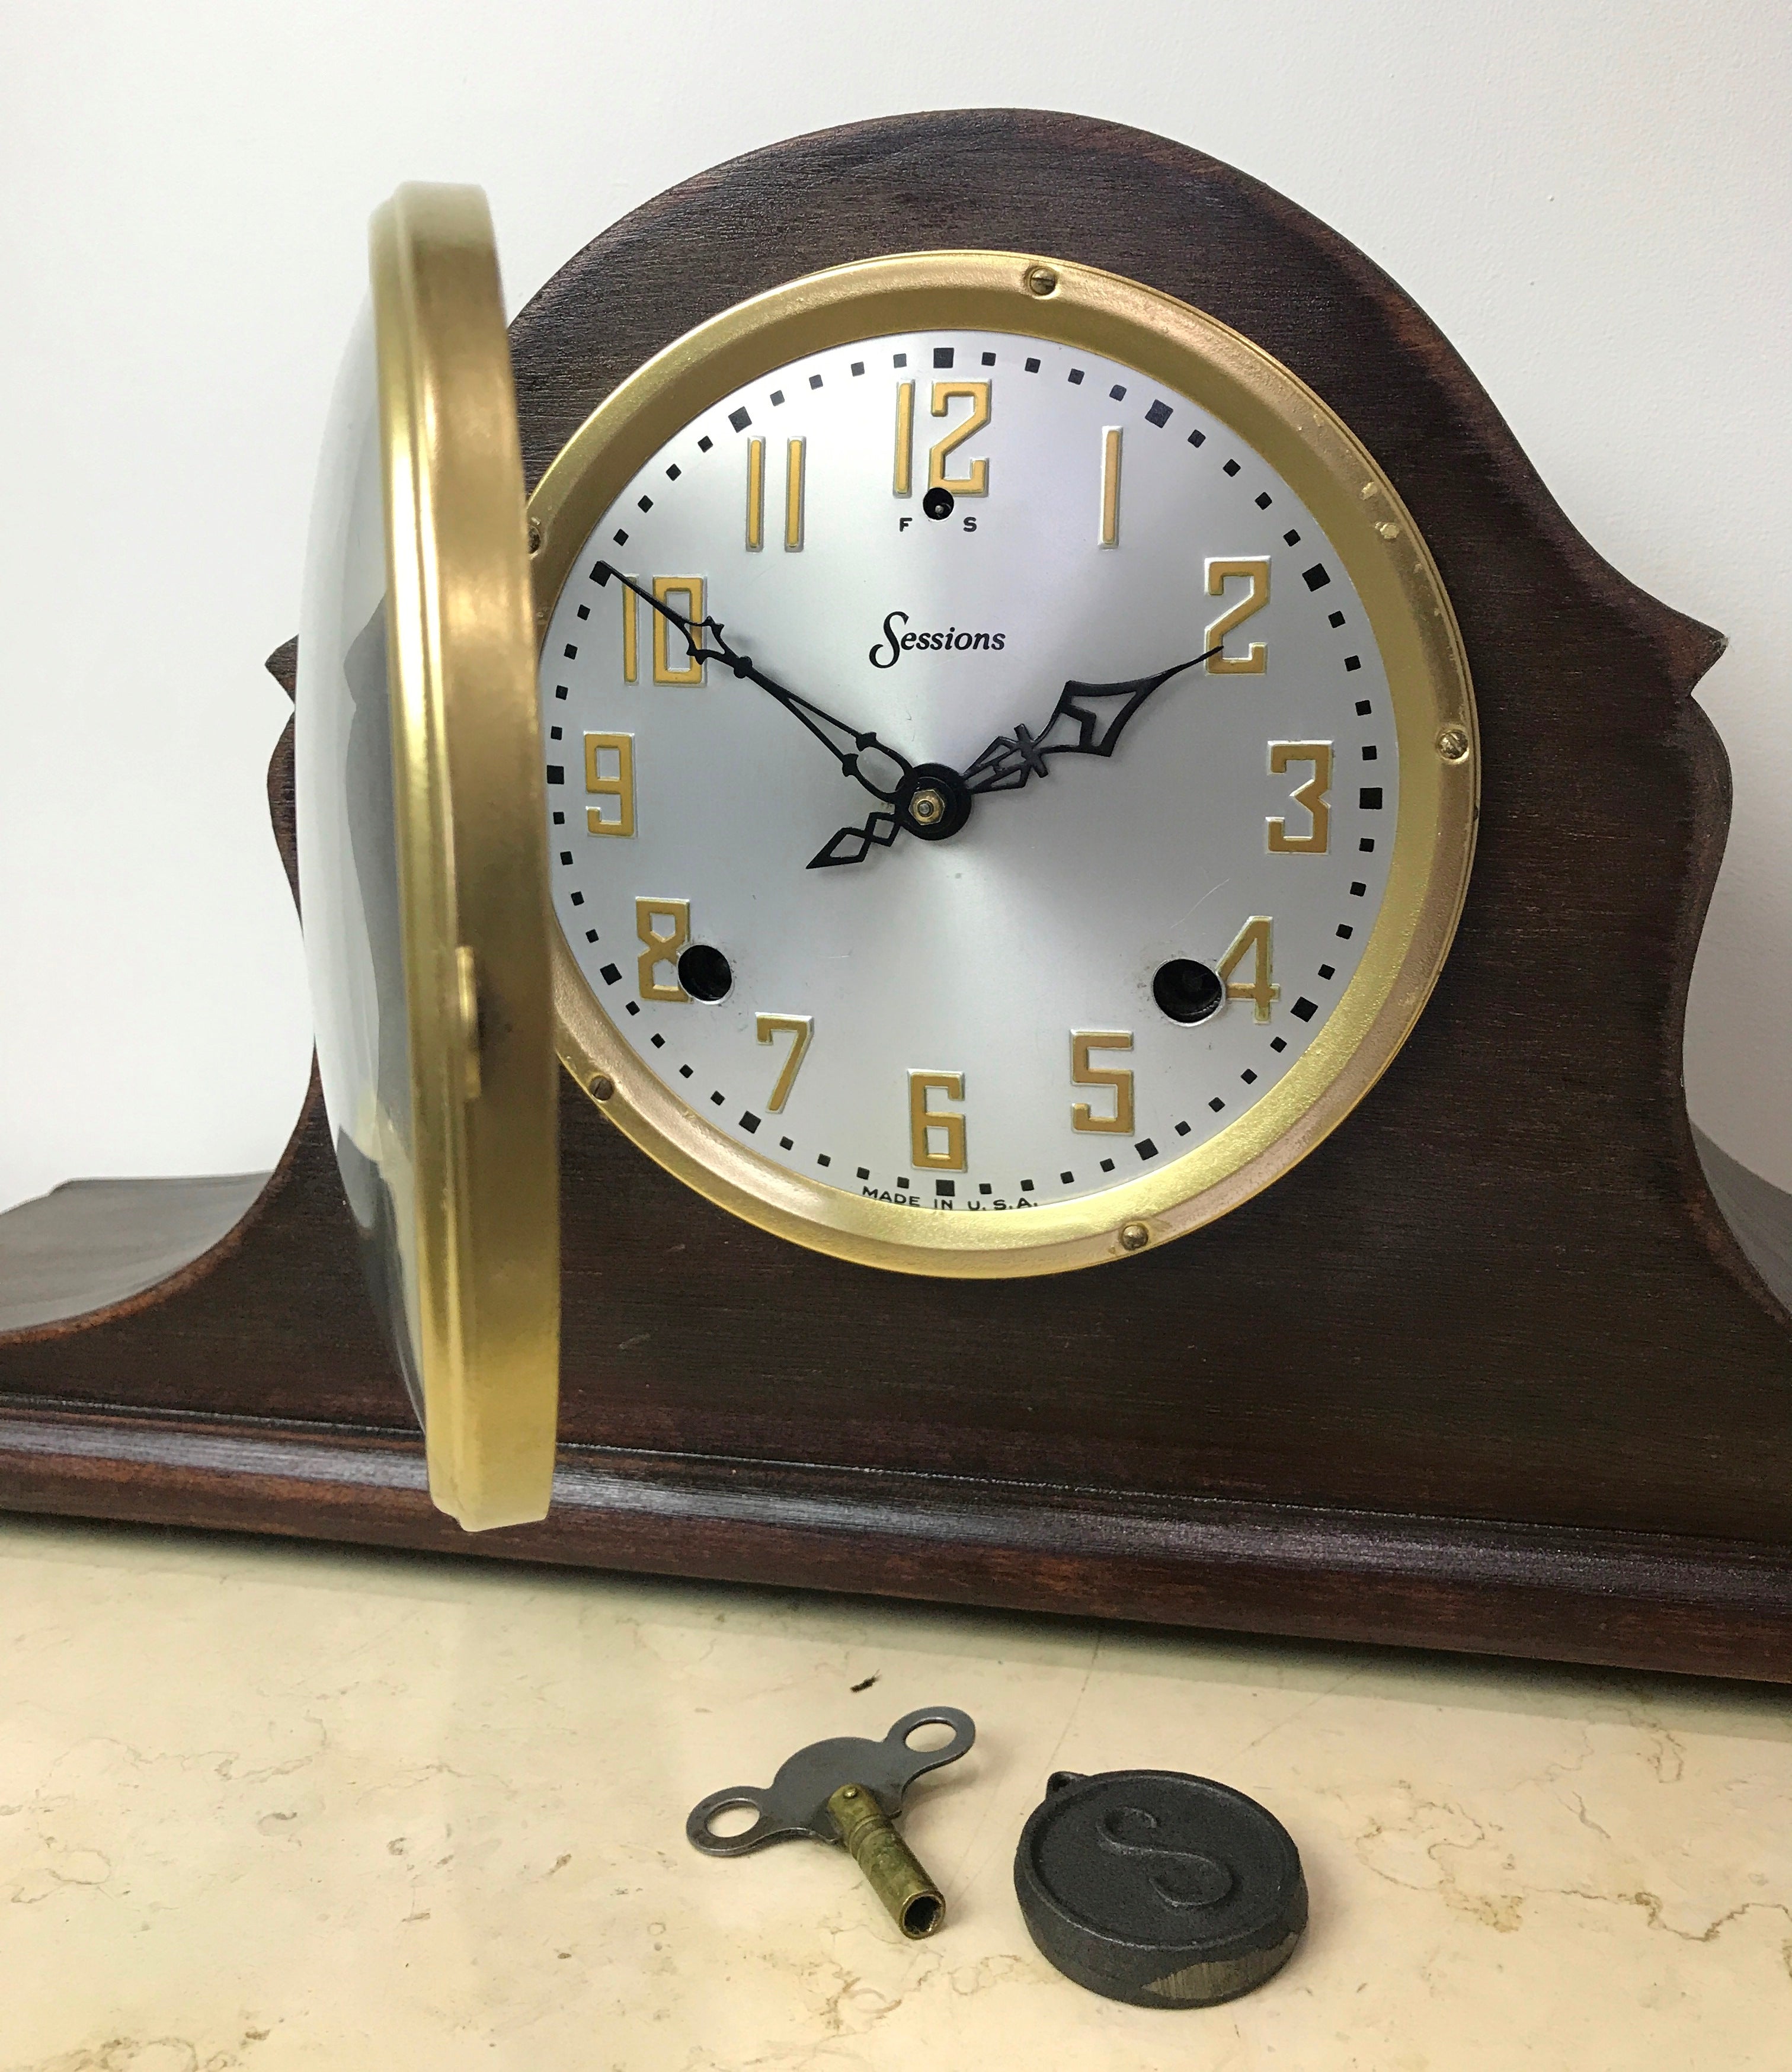 Vintage SESSIONS Bim Bam Chime Mantel Clock #1754 - eXibit collection